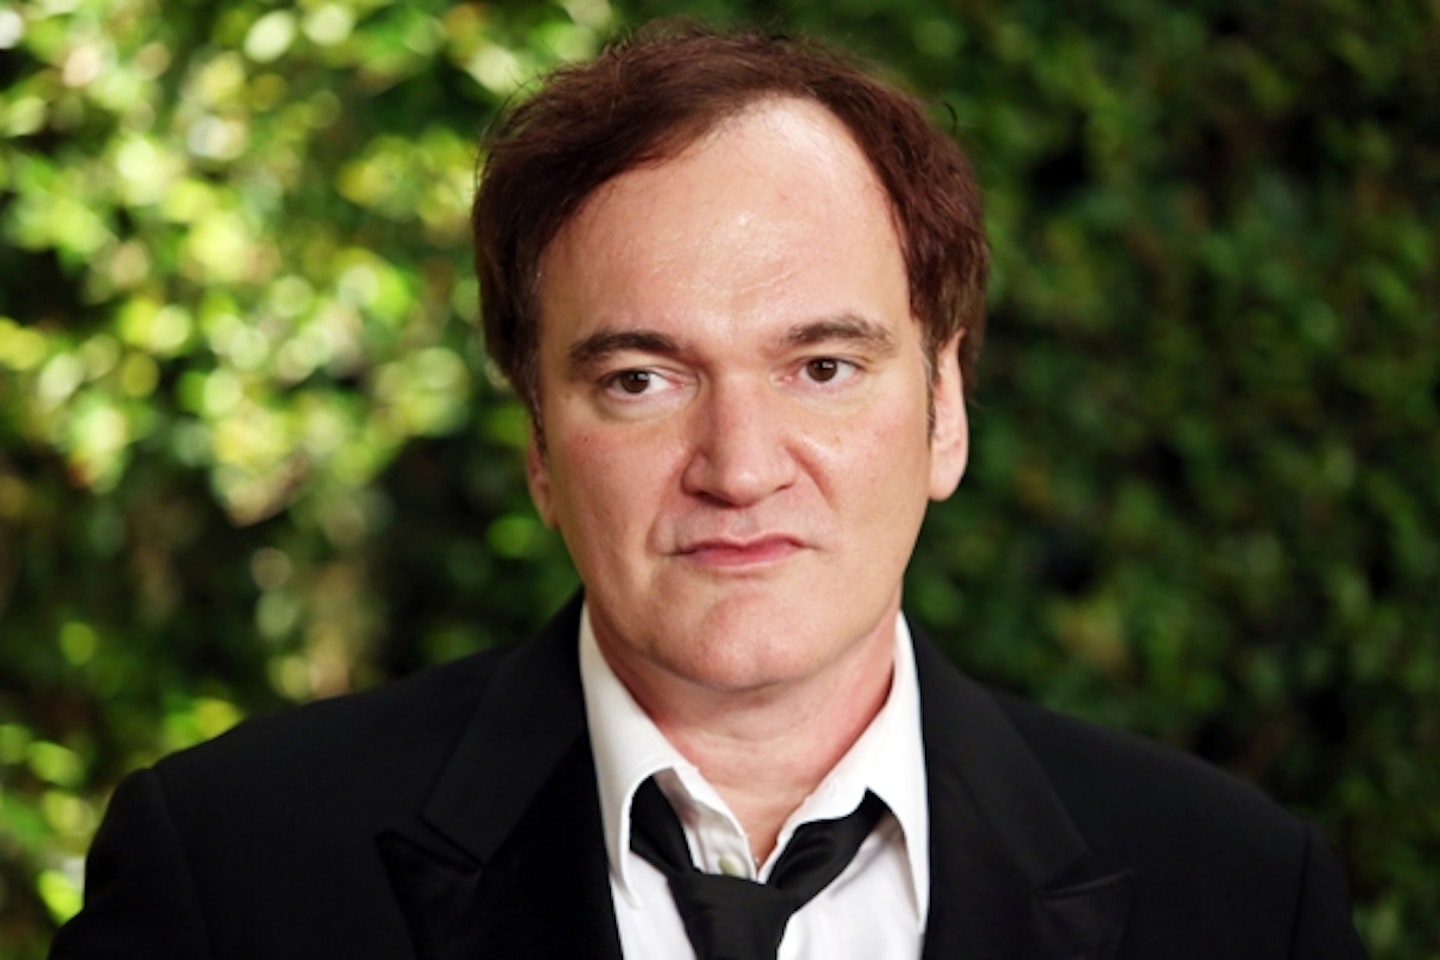 Quentin-Tarantino-Shelves-The-Hateful-Eight